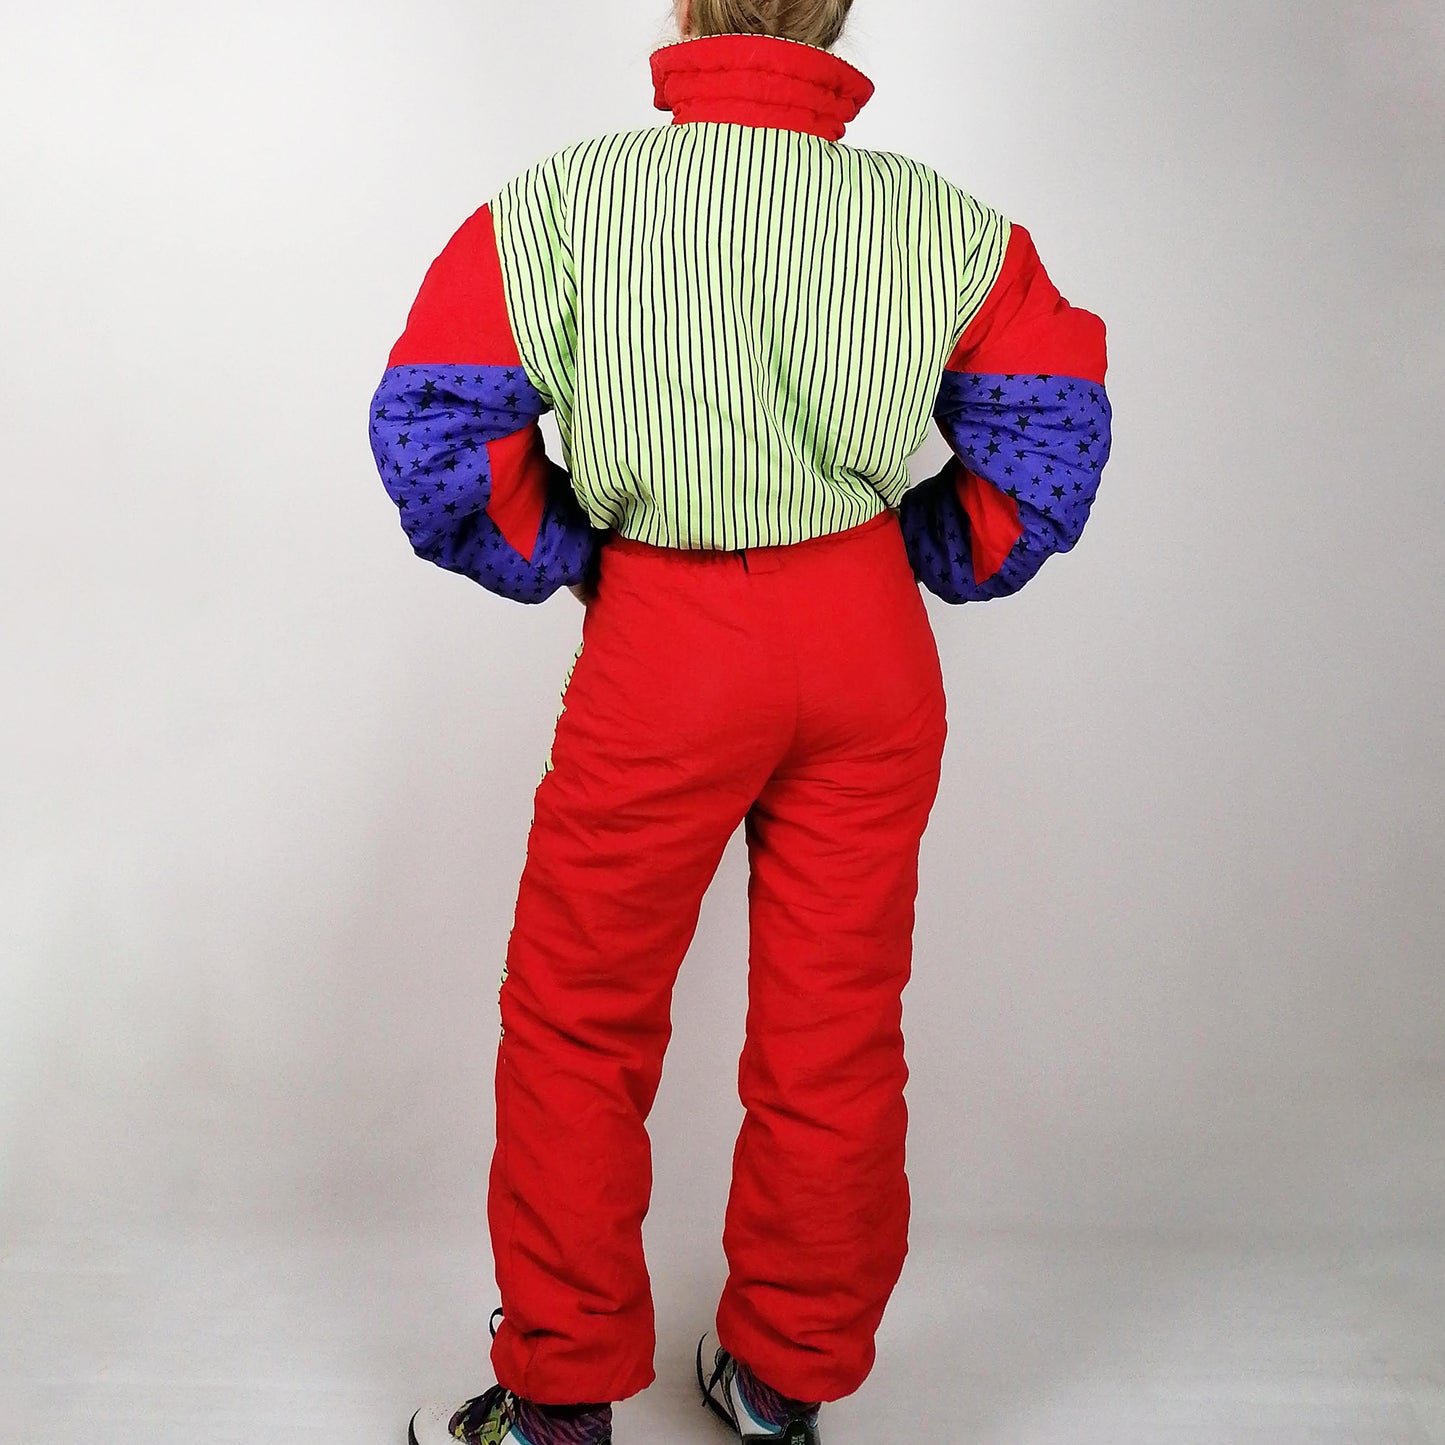 90's Ski Suit Crazy Print Stars Stripes - size S-M